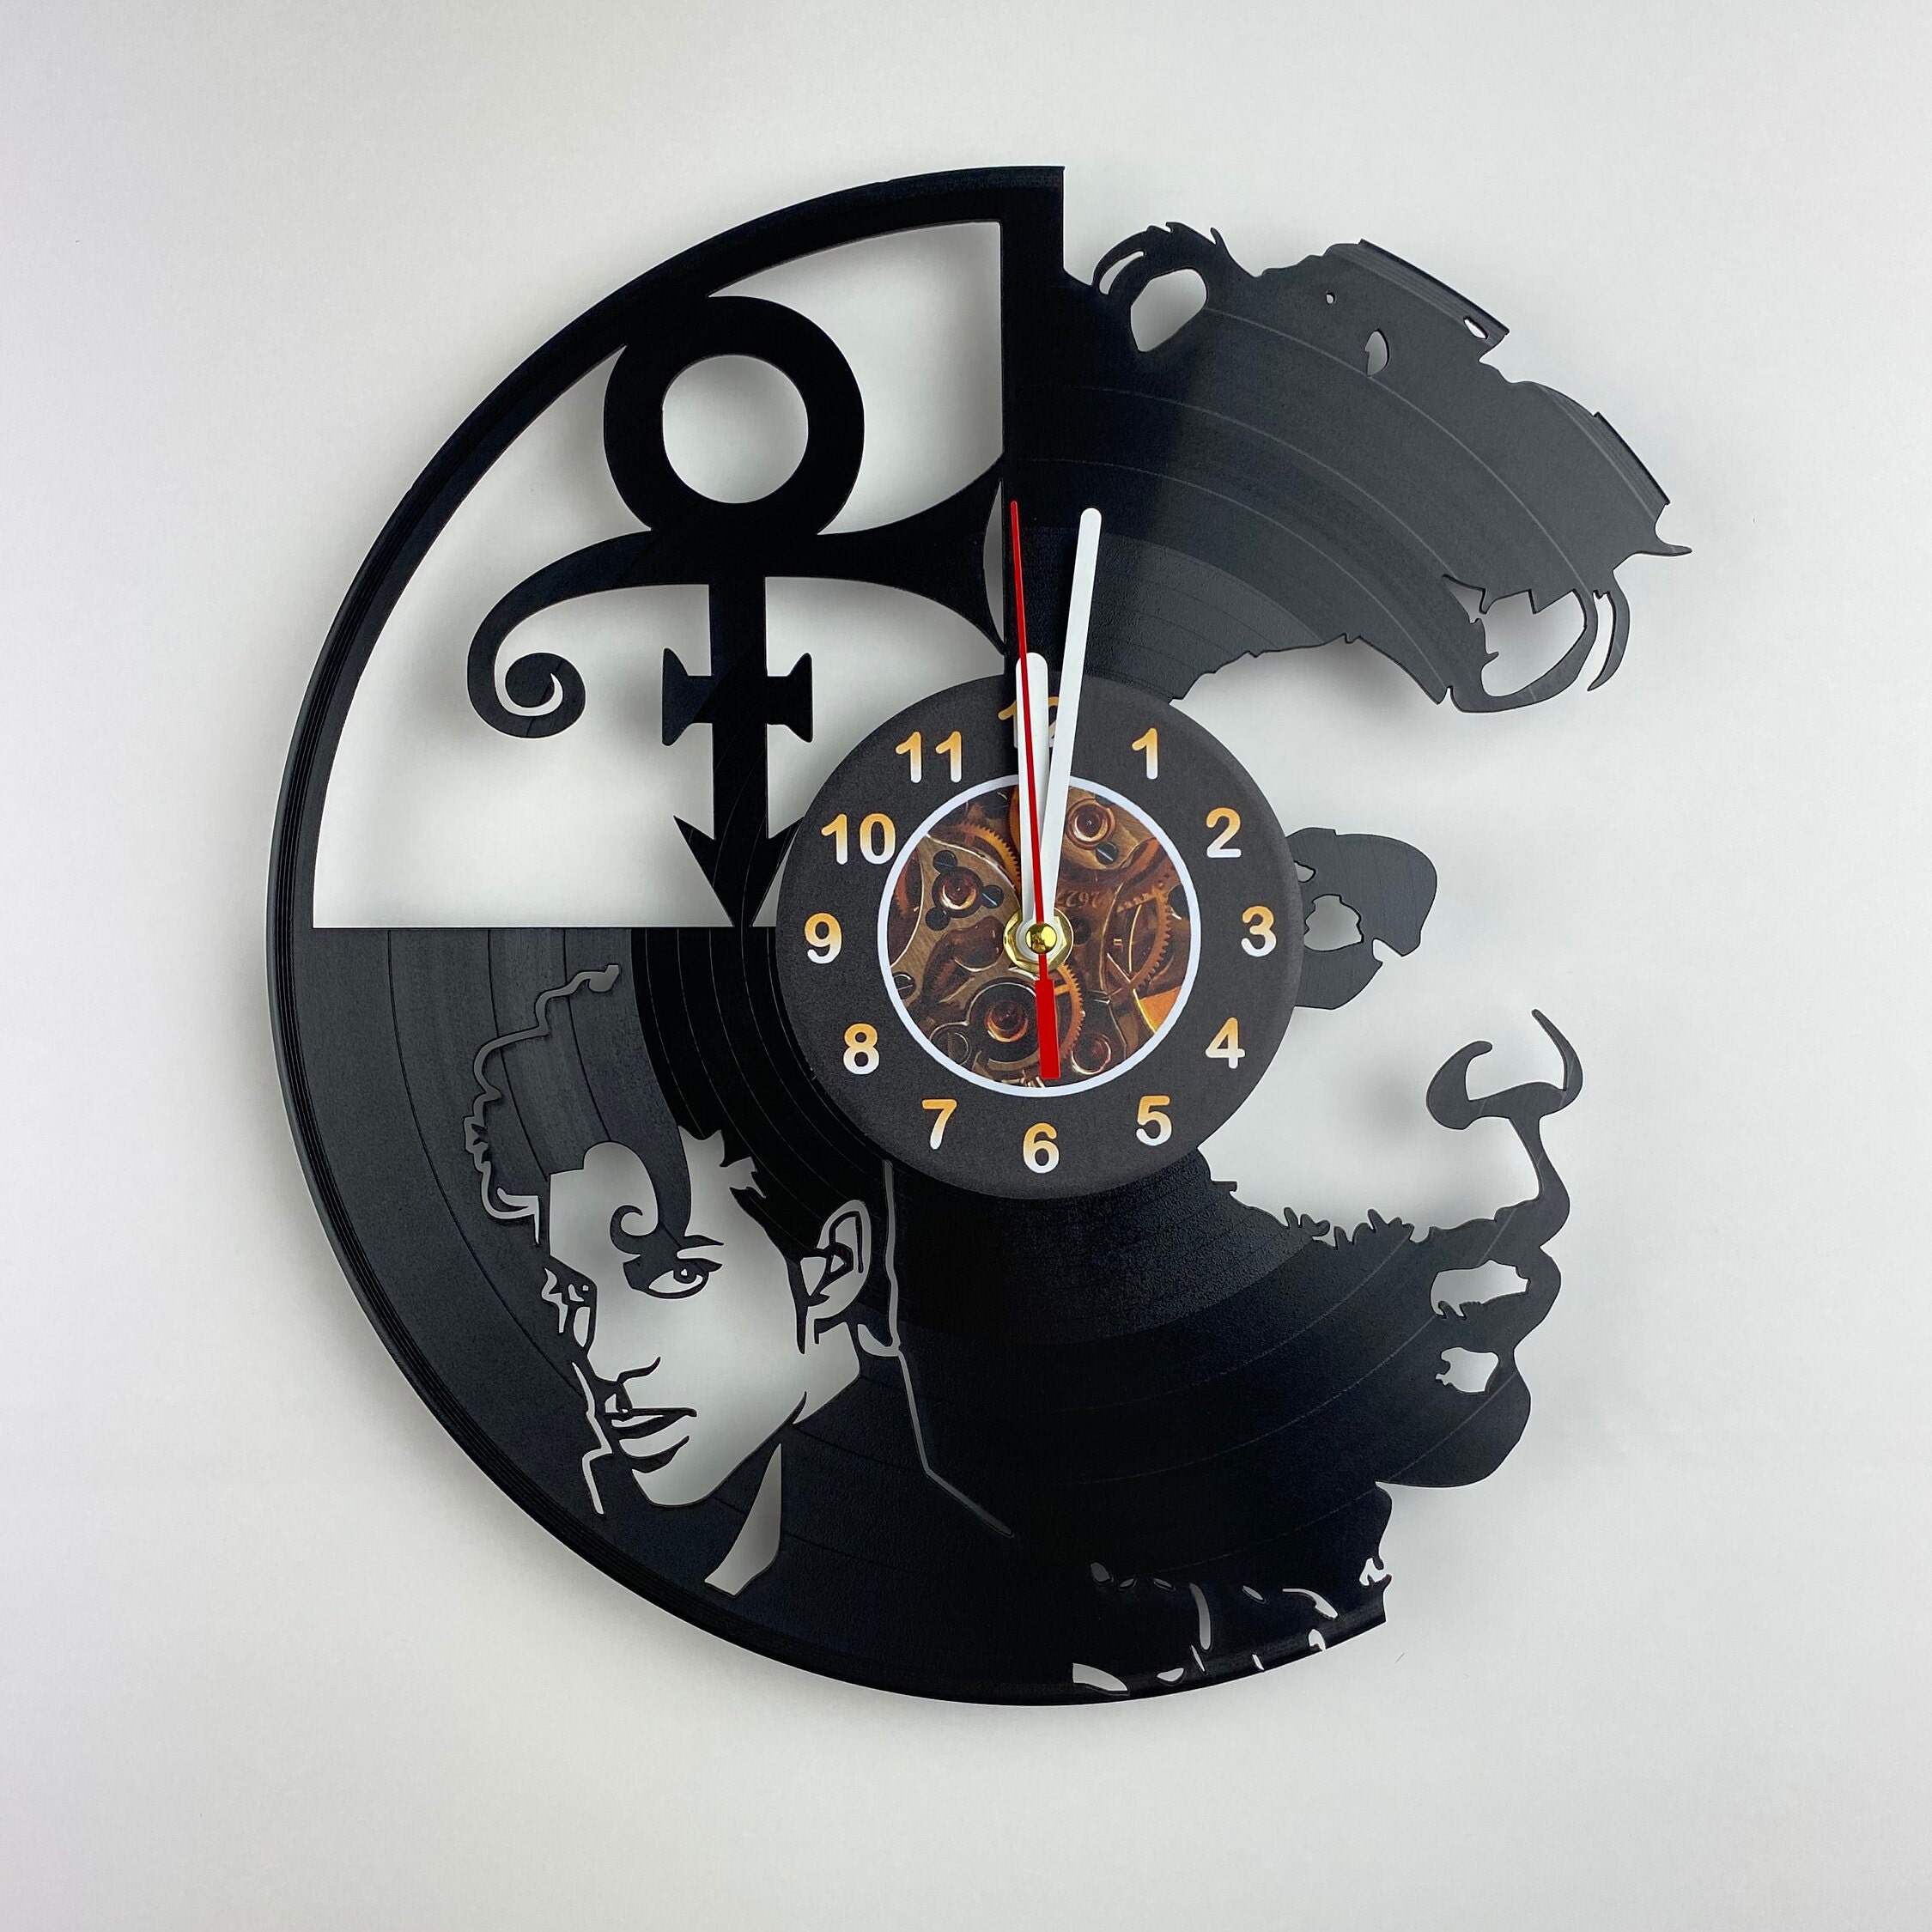 Tool Rock Band Wall Art, Hand Made Clock From Real Vinyl Record LP